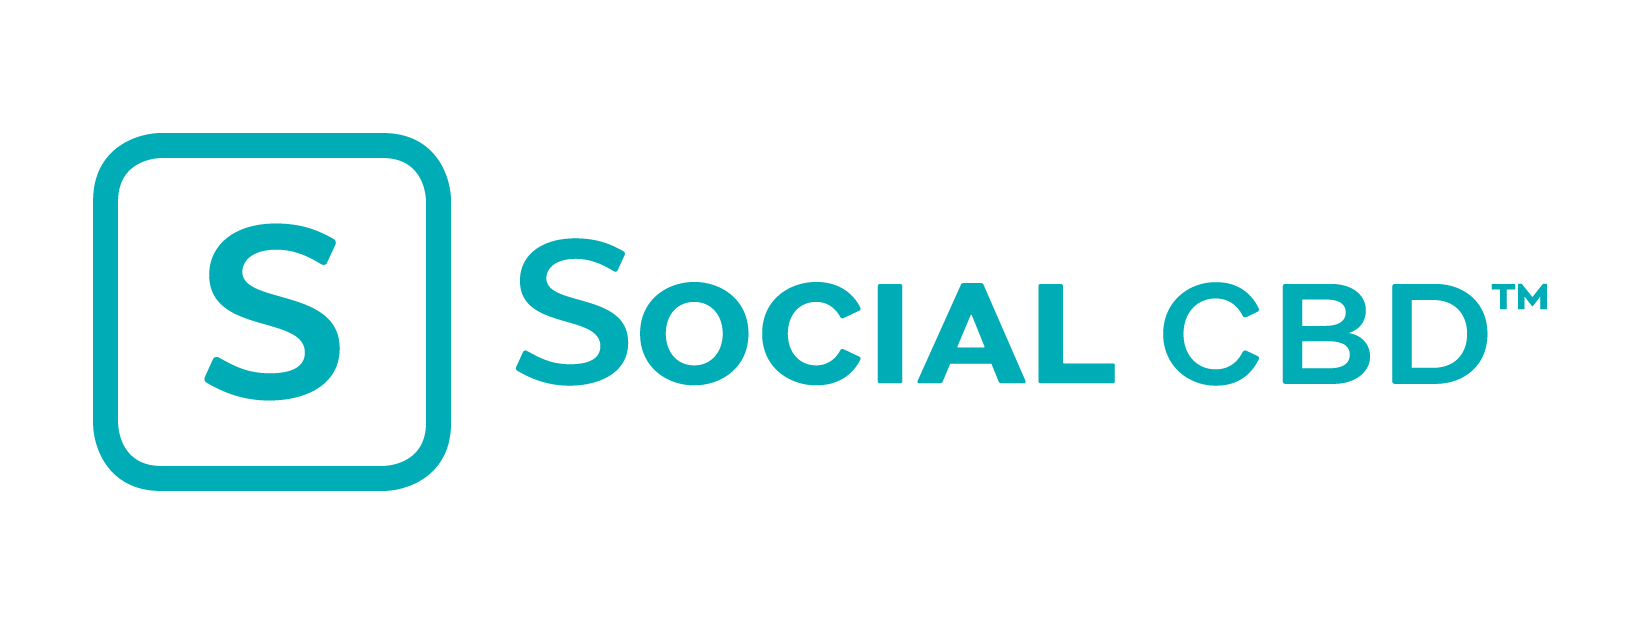 Social CBD logo